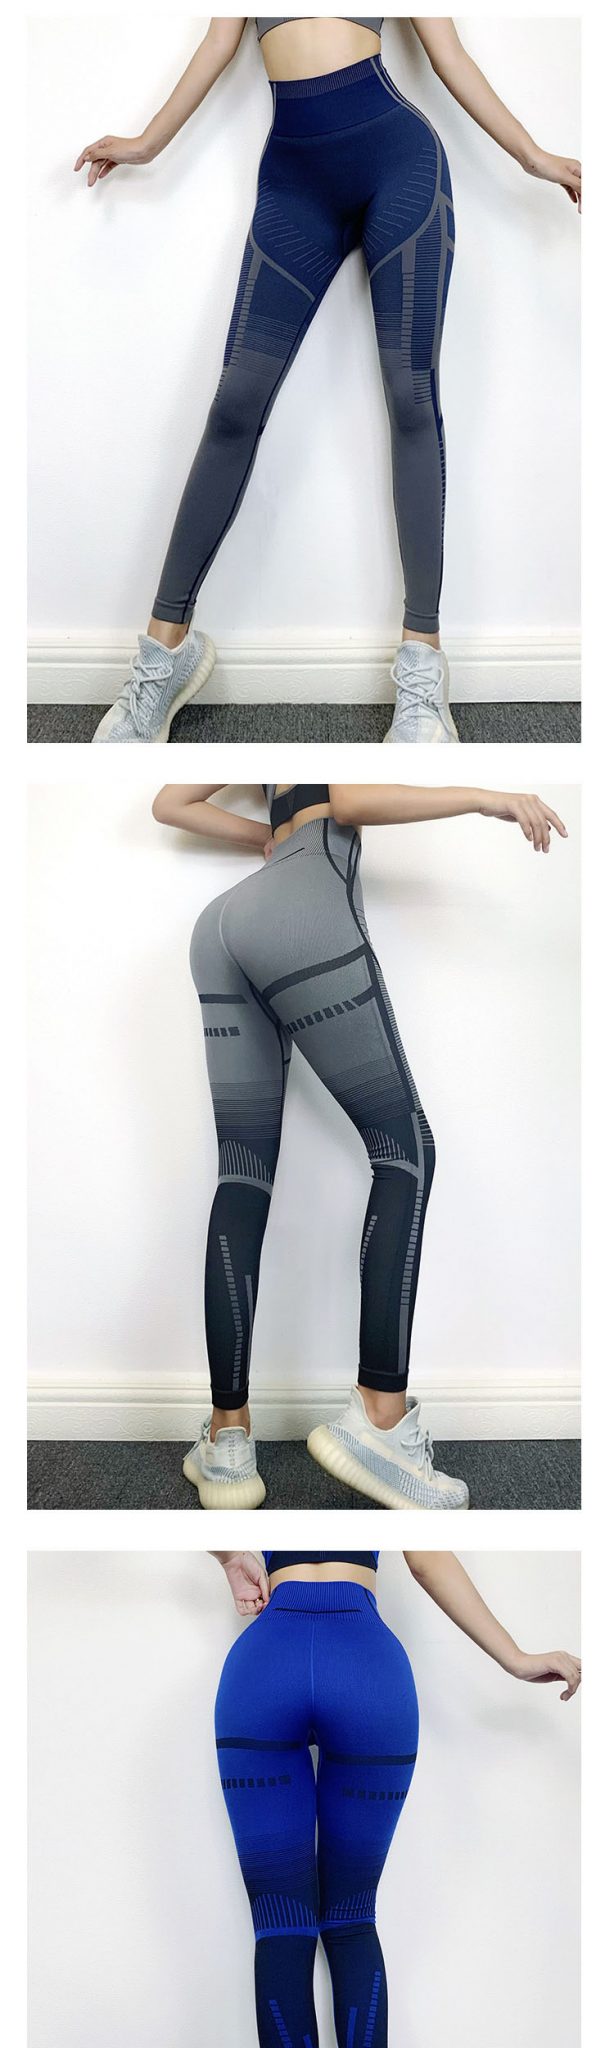 Leggings transparent sport - Activewear manufacturer Sportswear ...